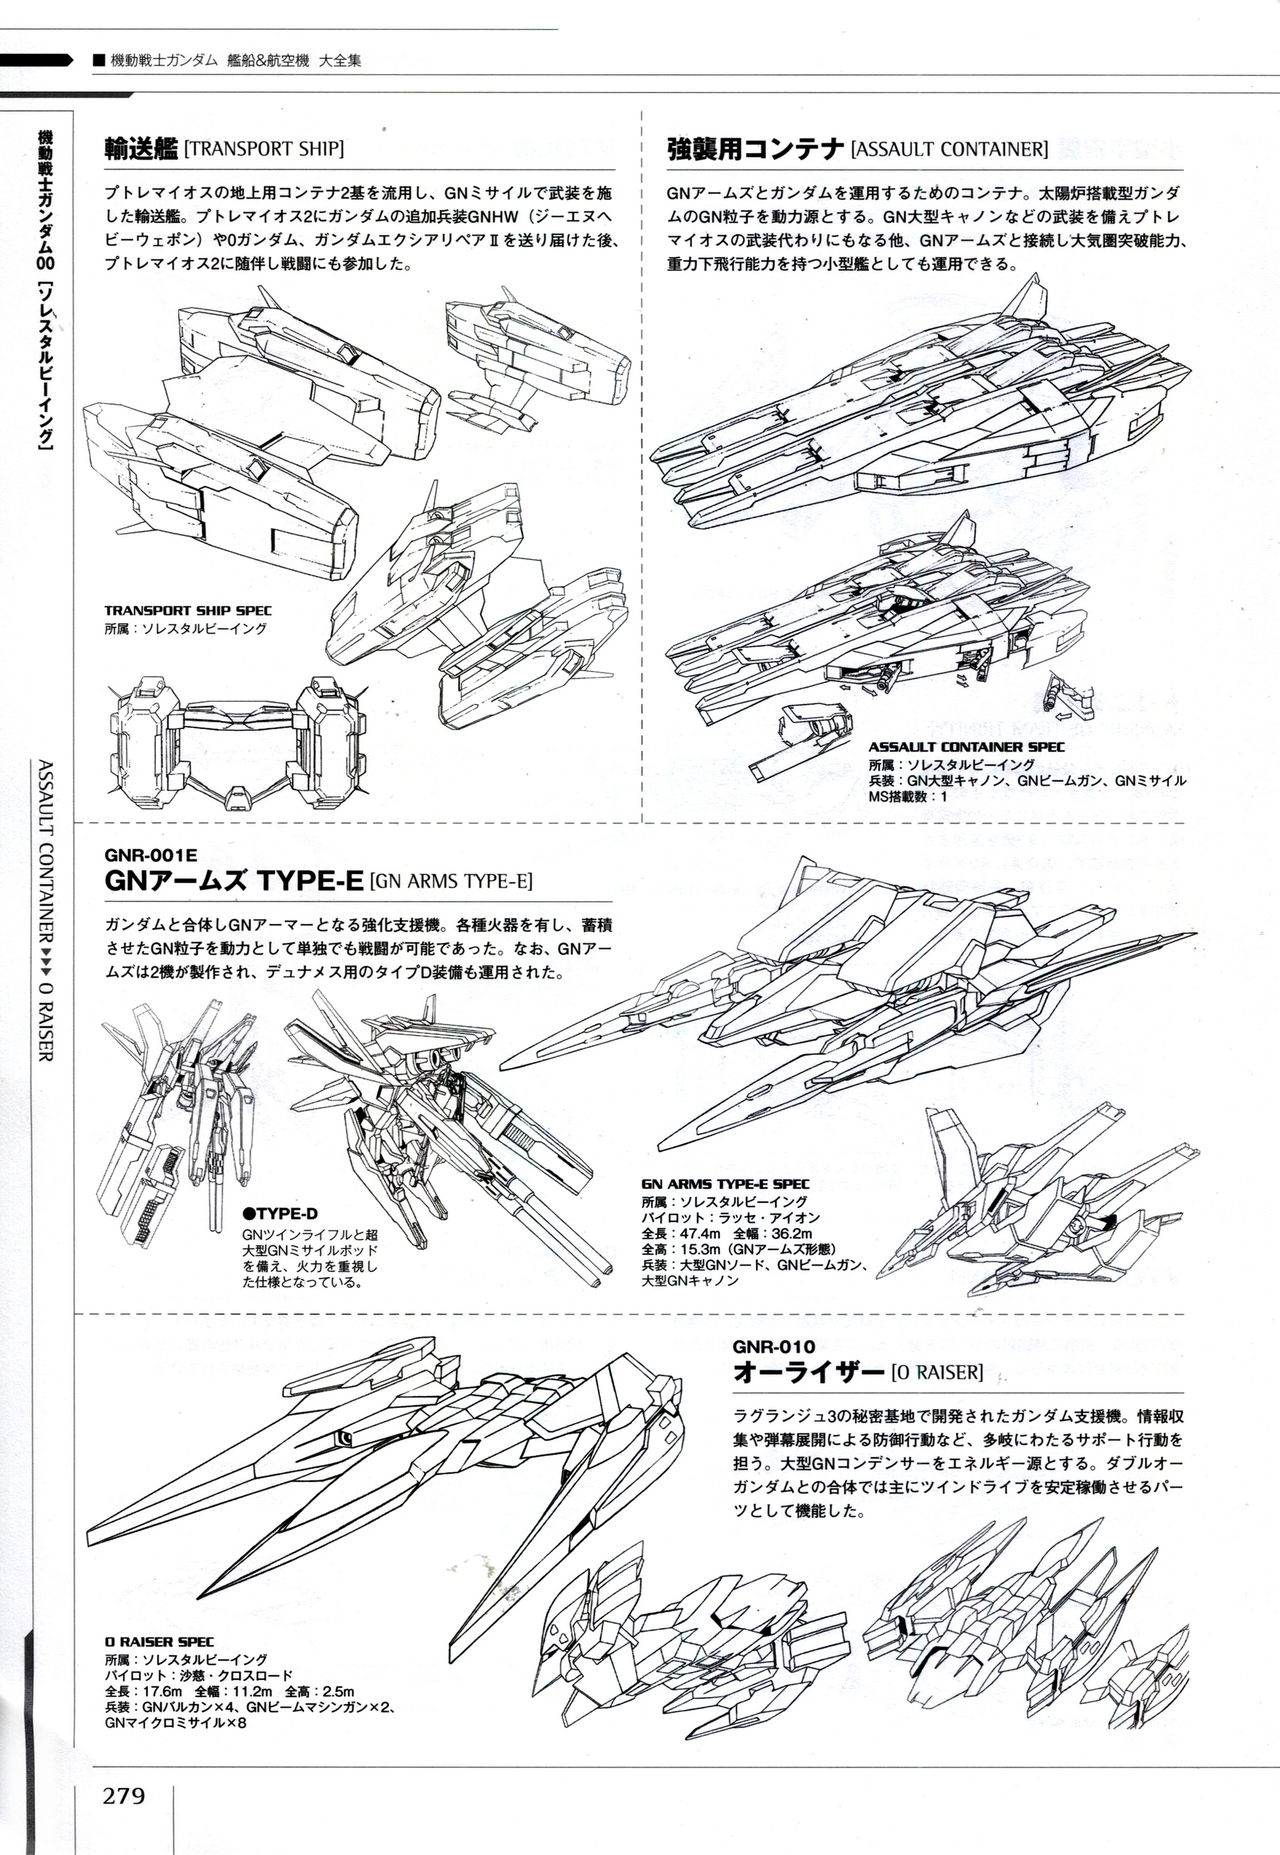 Mobile Suit Gundam - Ship & Aerospace Plane Encyclopedia - Revised Edition 284